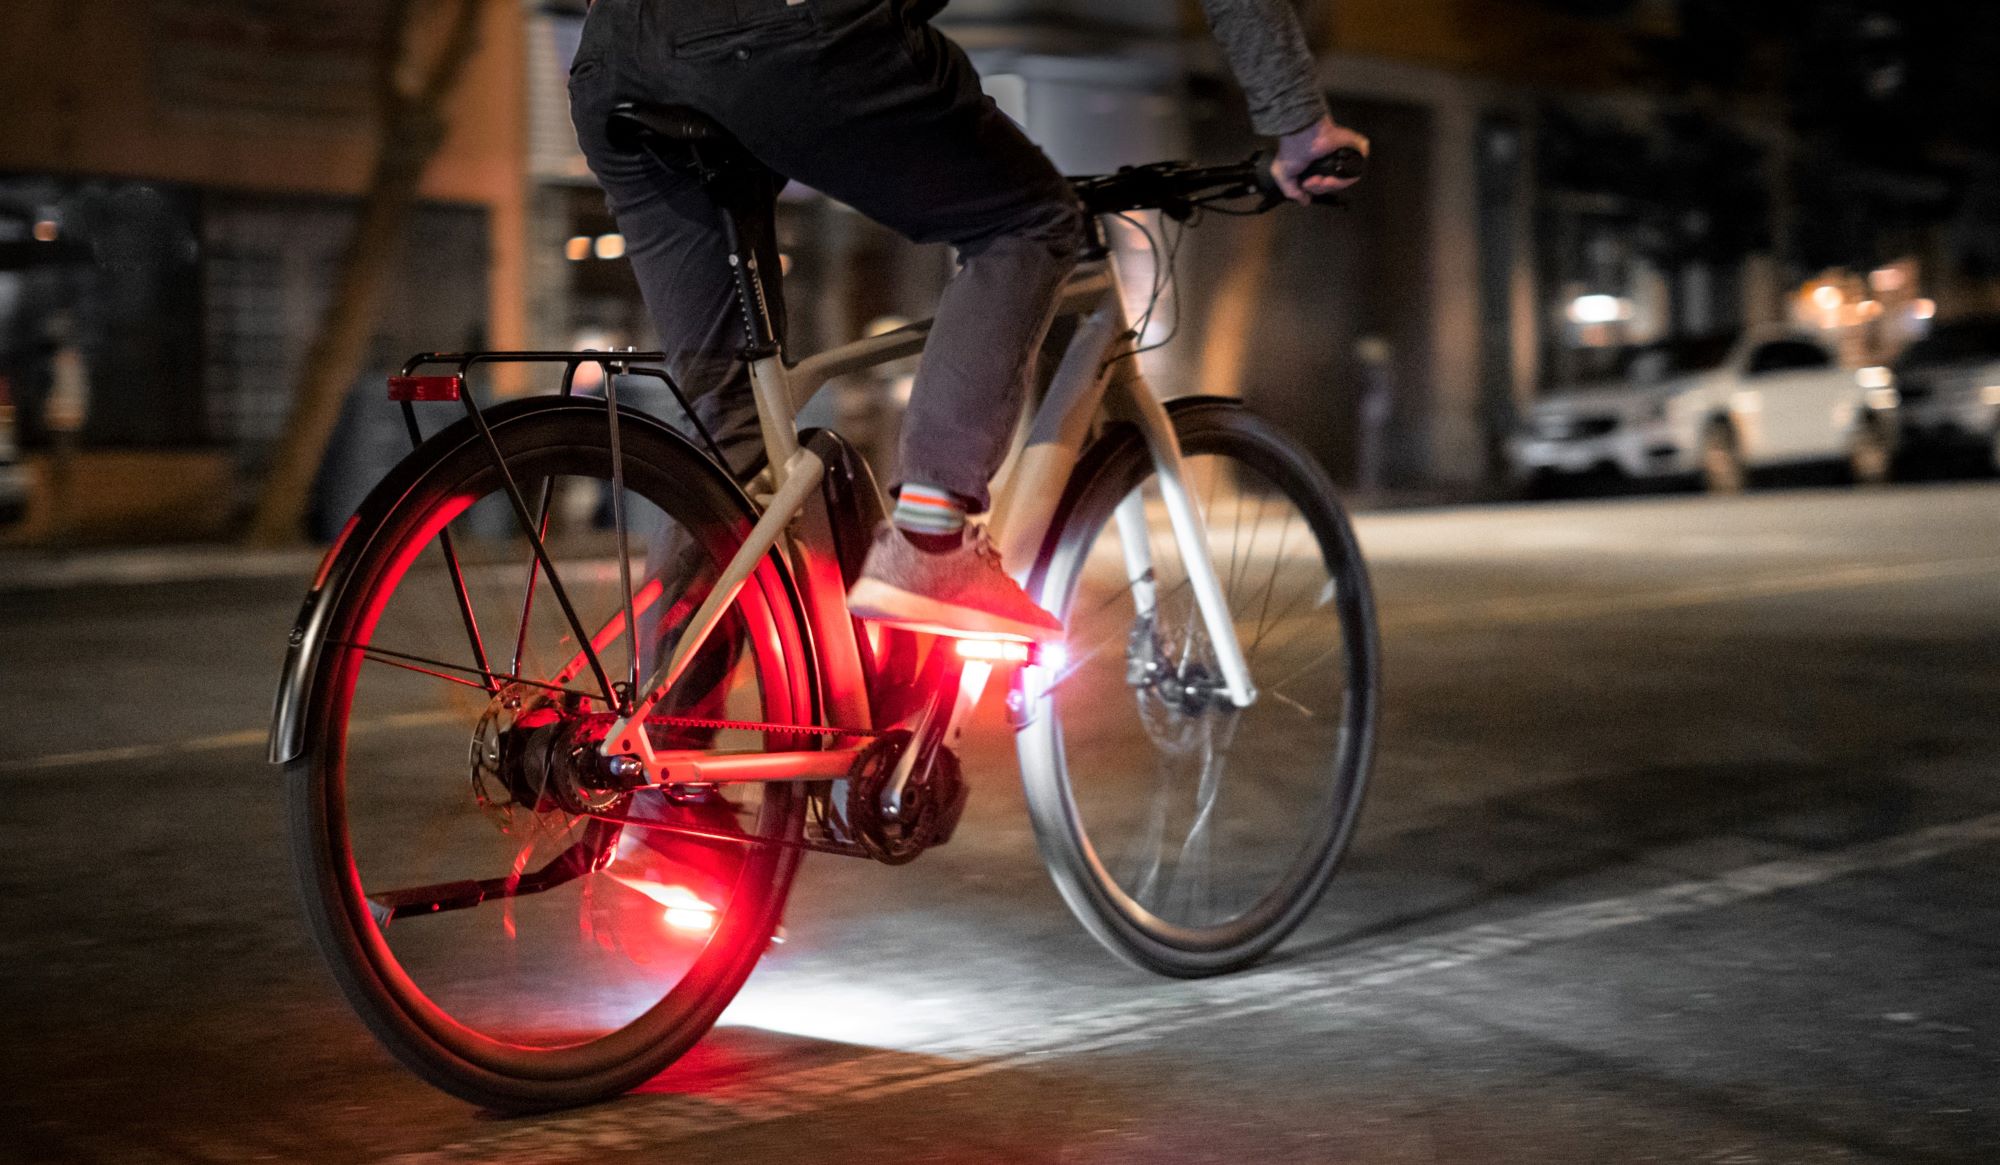 arclight safest bike light